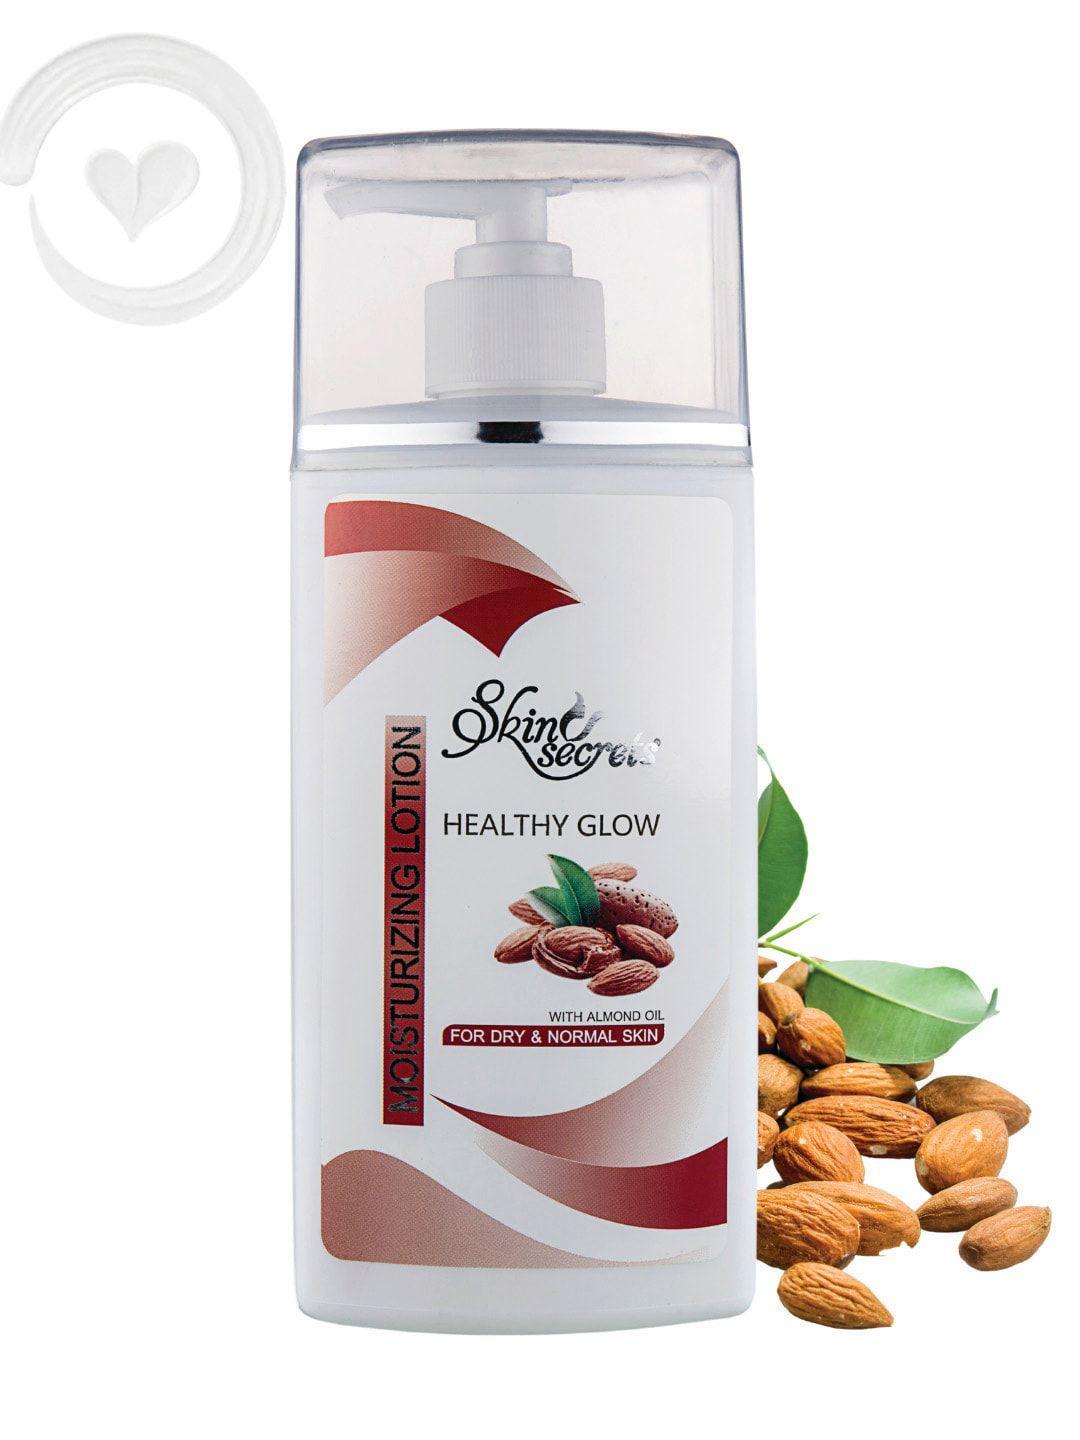 skin secrets healthy glow moisturizing body lotion with almond oil - 500 ml